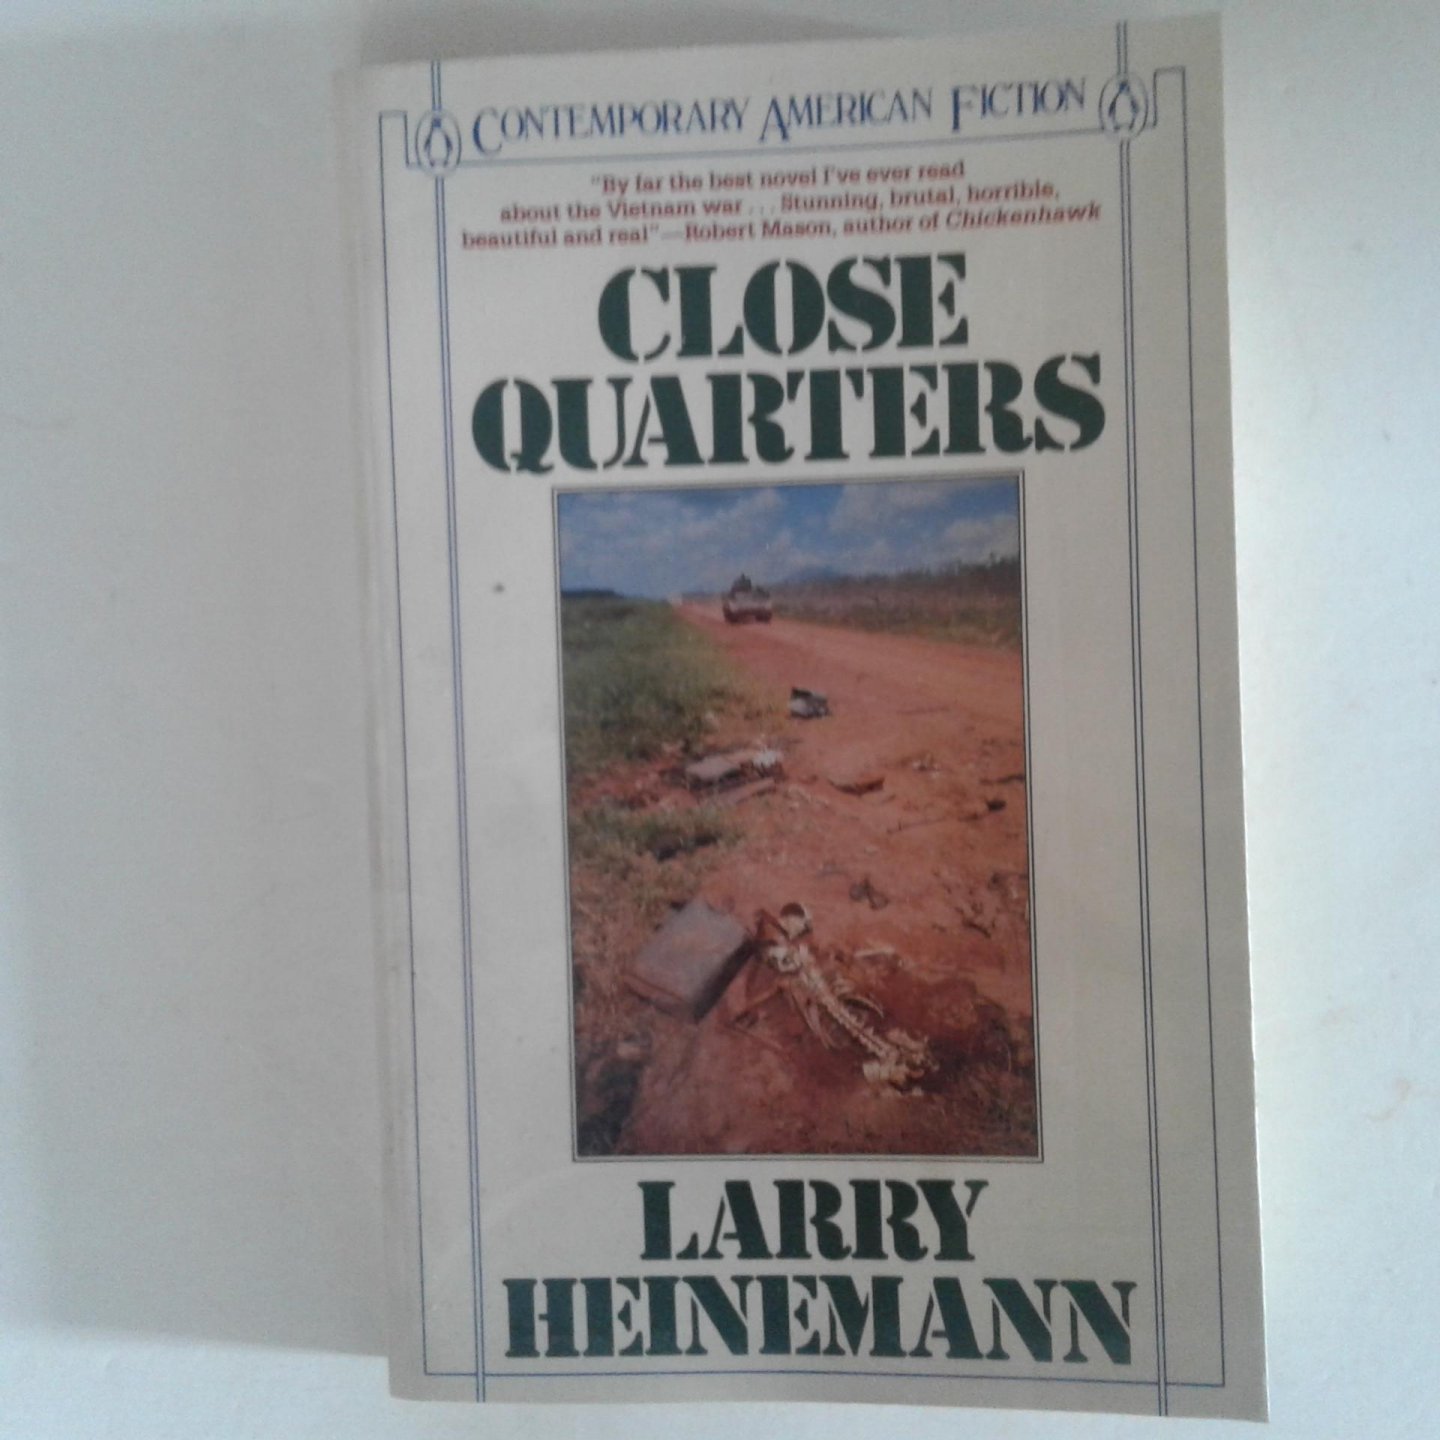 Heinemann, Larry - Close Quarters